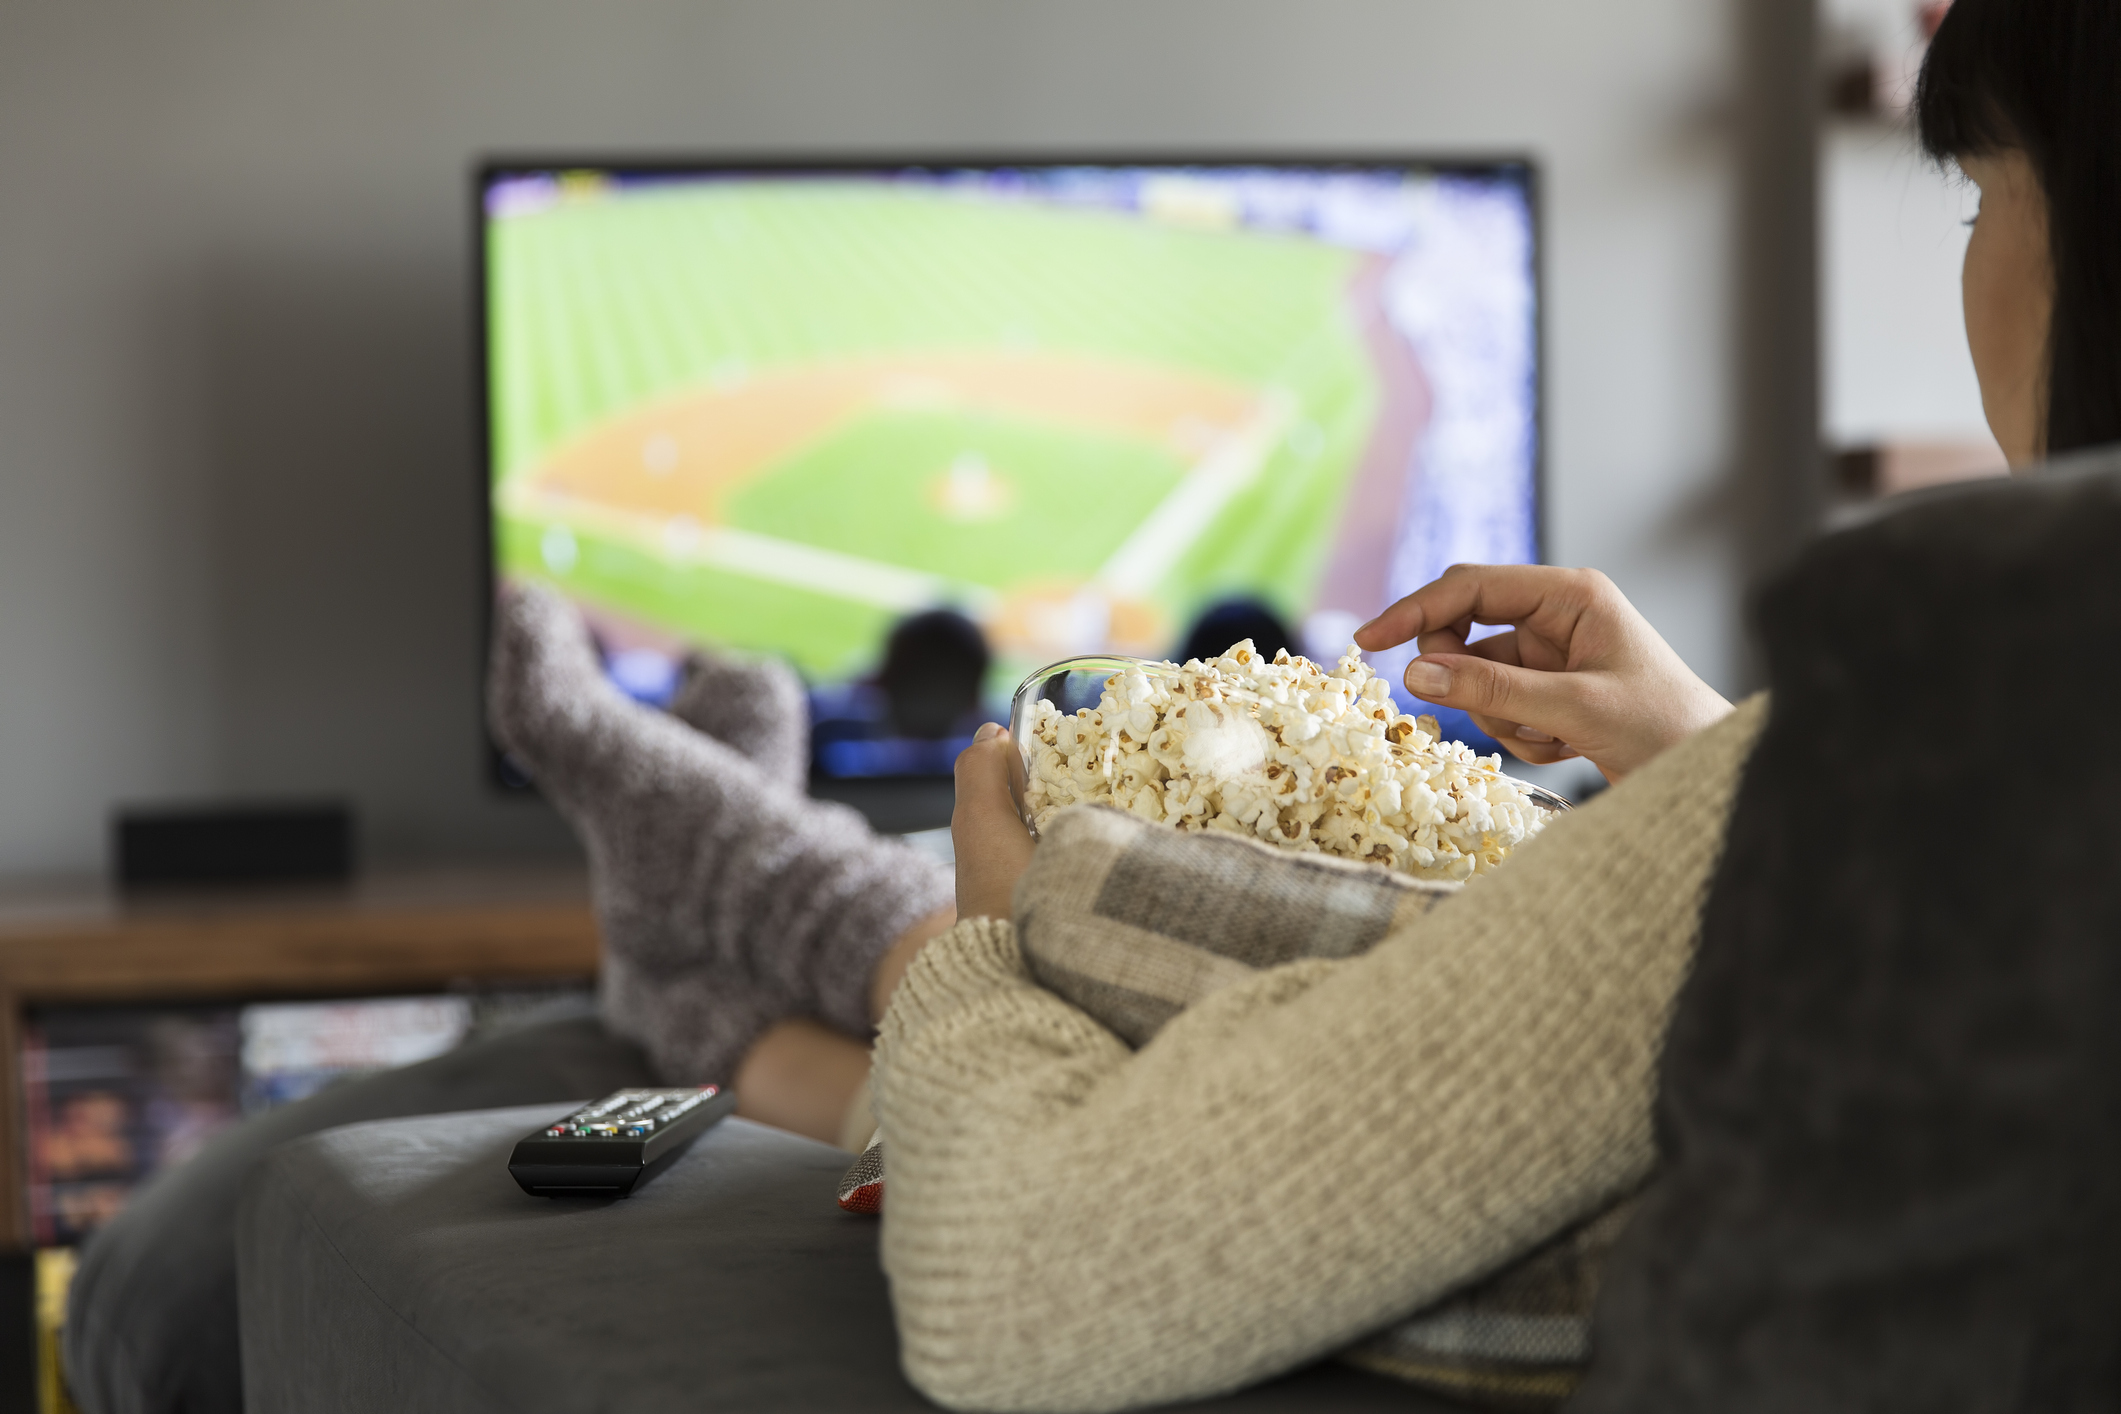 MLB TV  Watch MLB Games on Verizon Fios